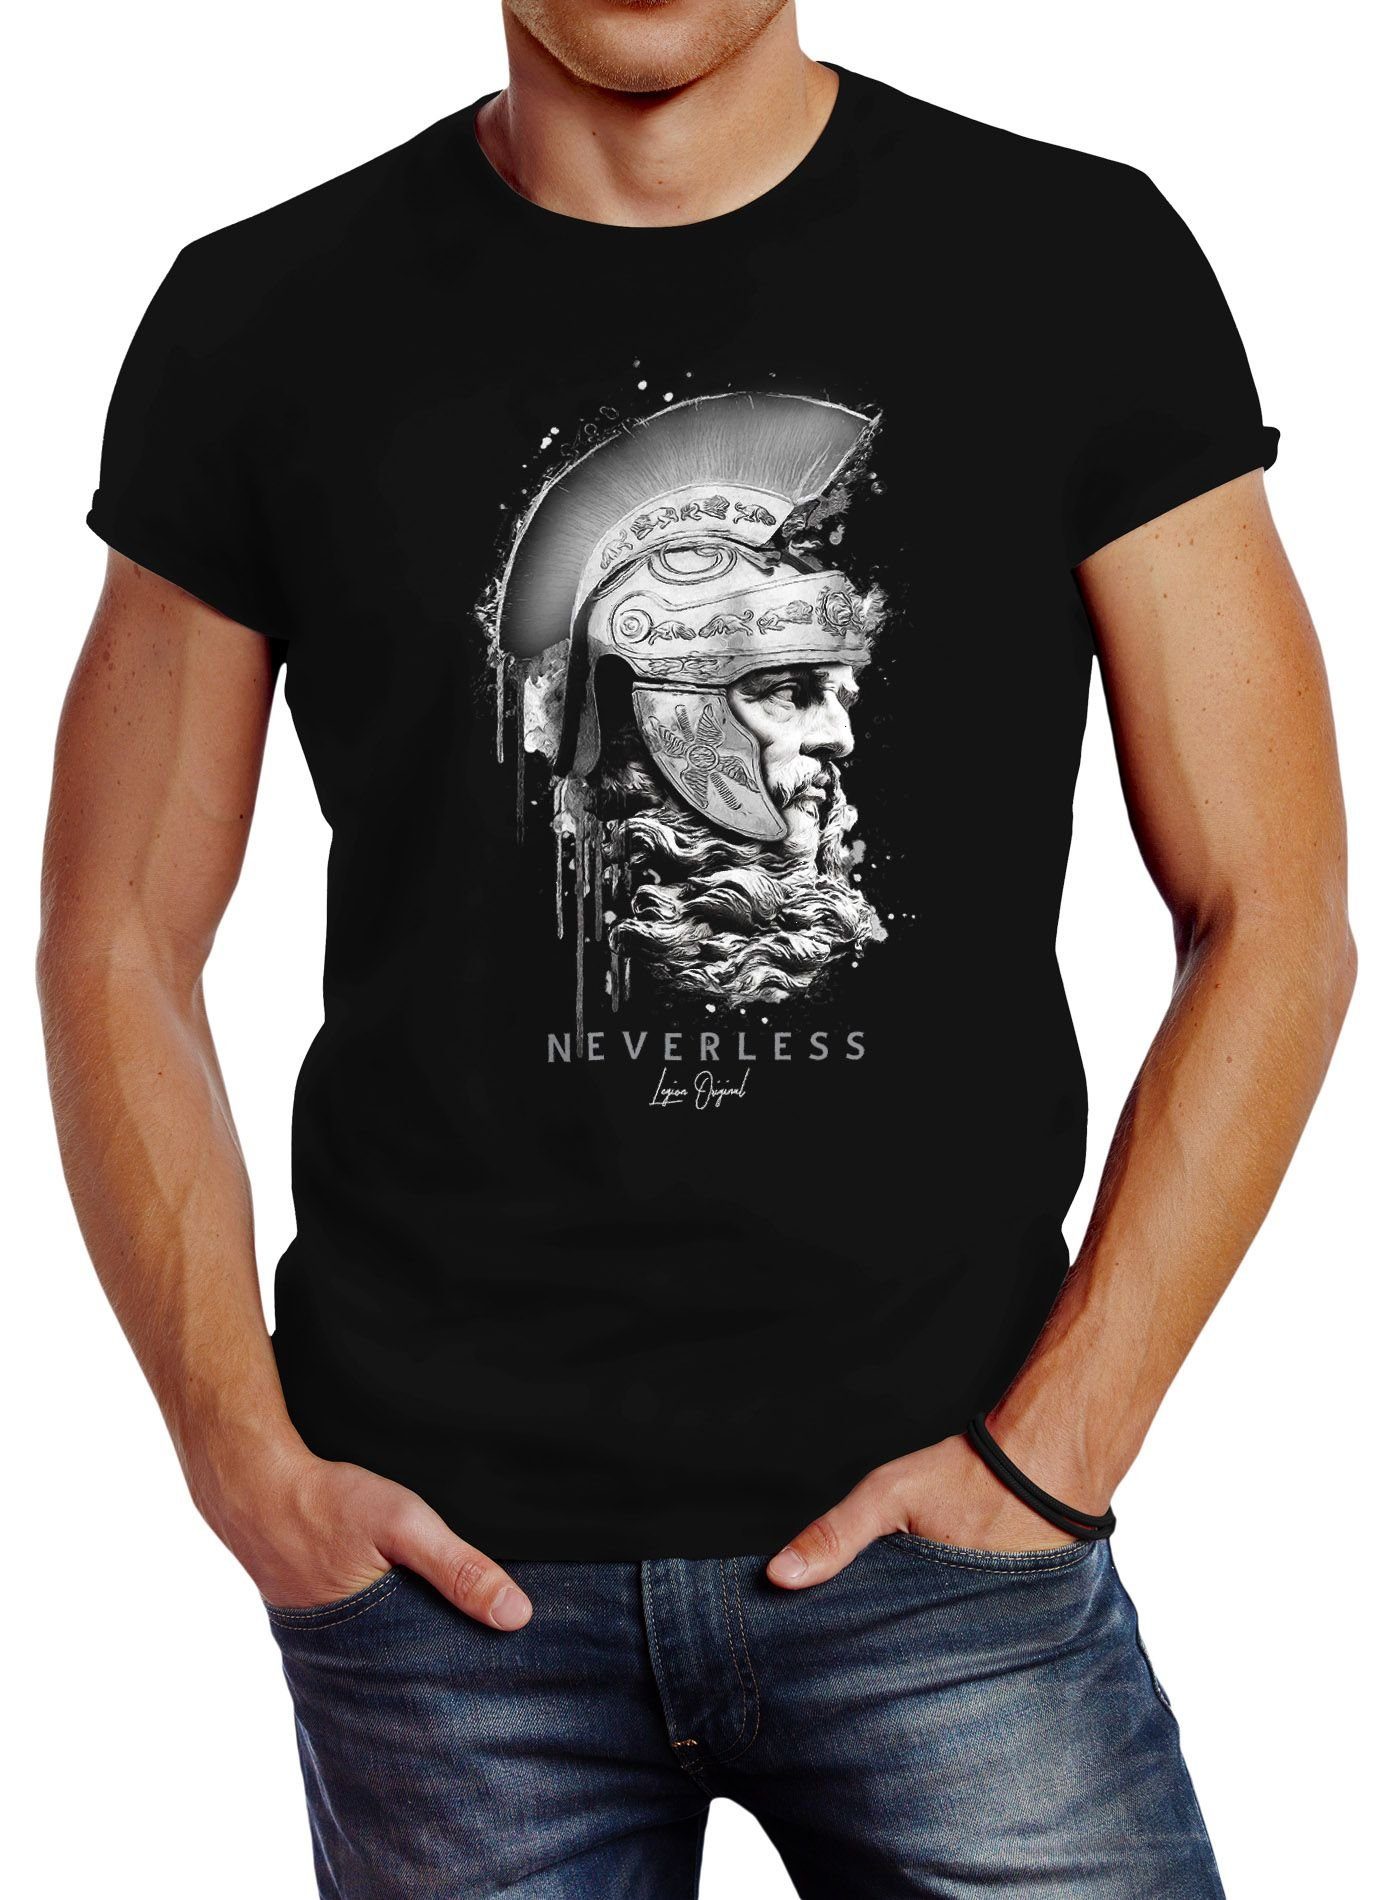 Neverless Print-Shirt Neverless® Herren T-Shirt Sparta Spartaner Kopf Helm Krieger Fashion Streetstyle mit Print schwarz